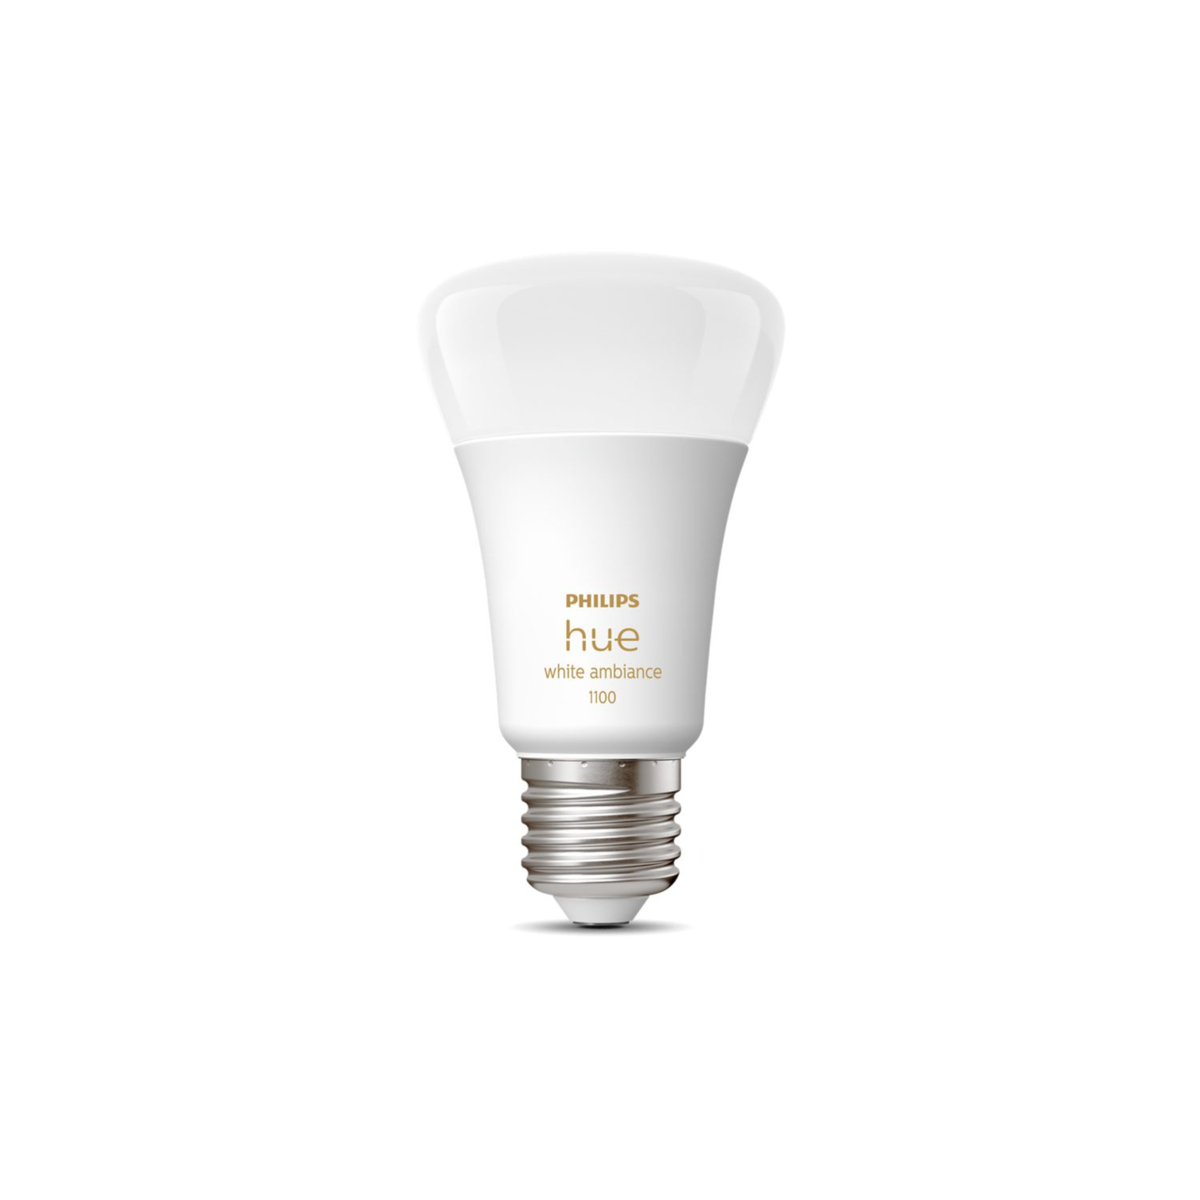 Philips Hue White Ambiance E27 Smart Light Bulb, 9 W-75 W, 1100 Lumen